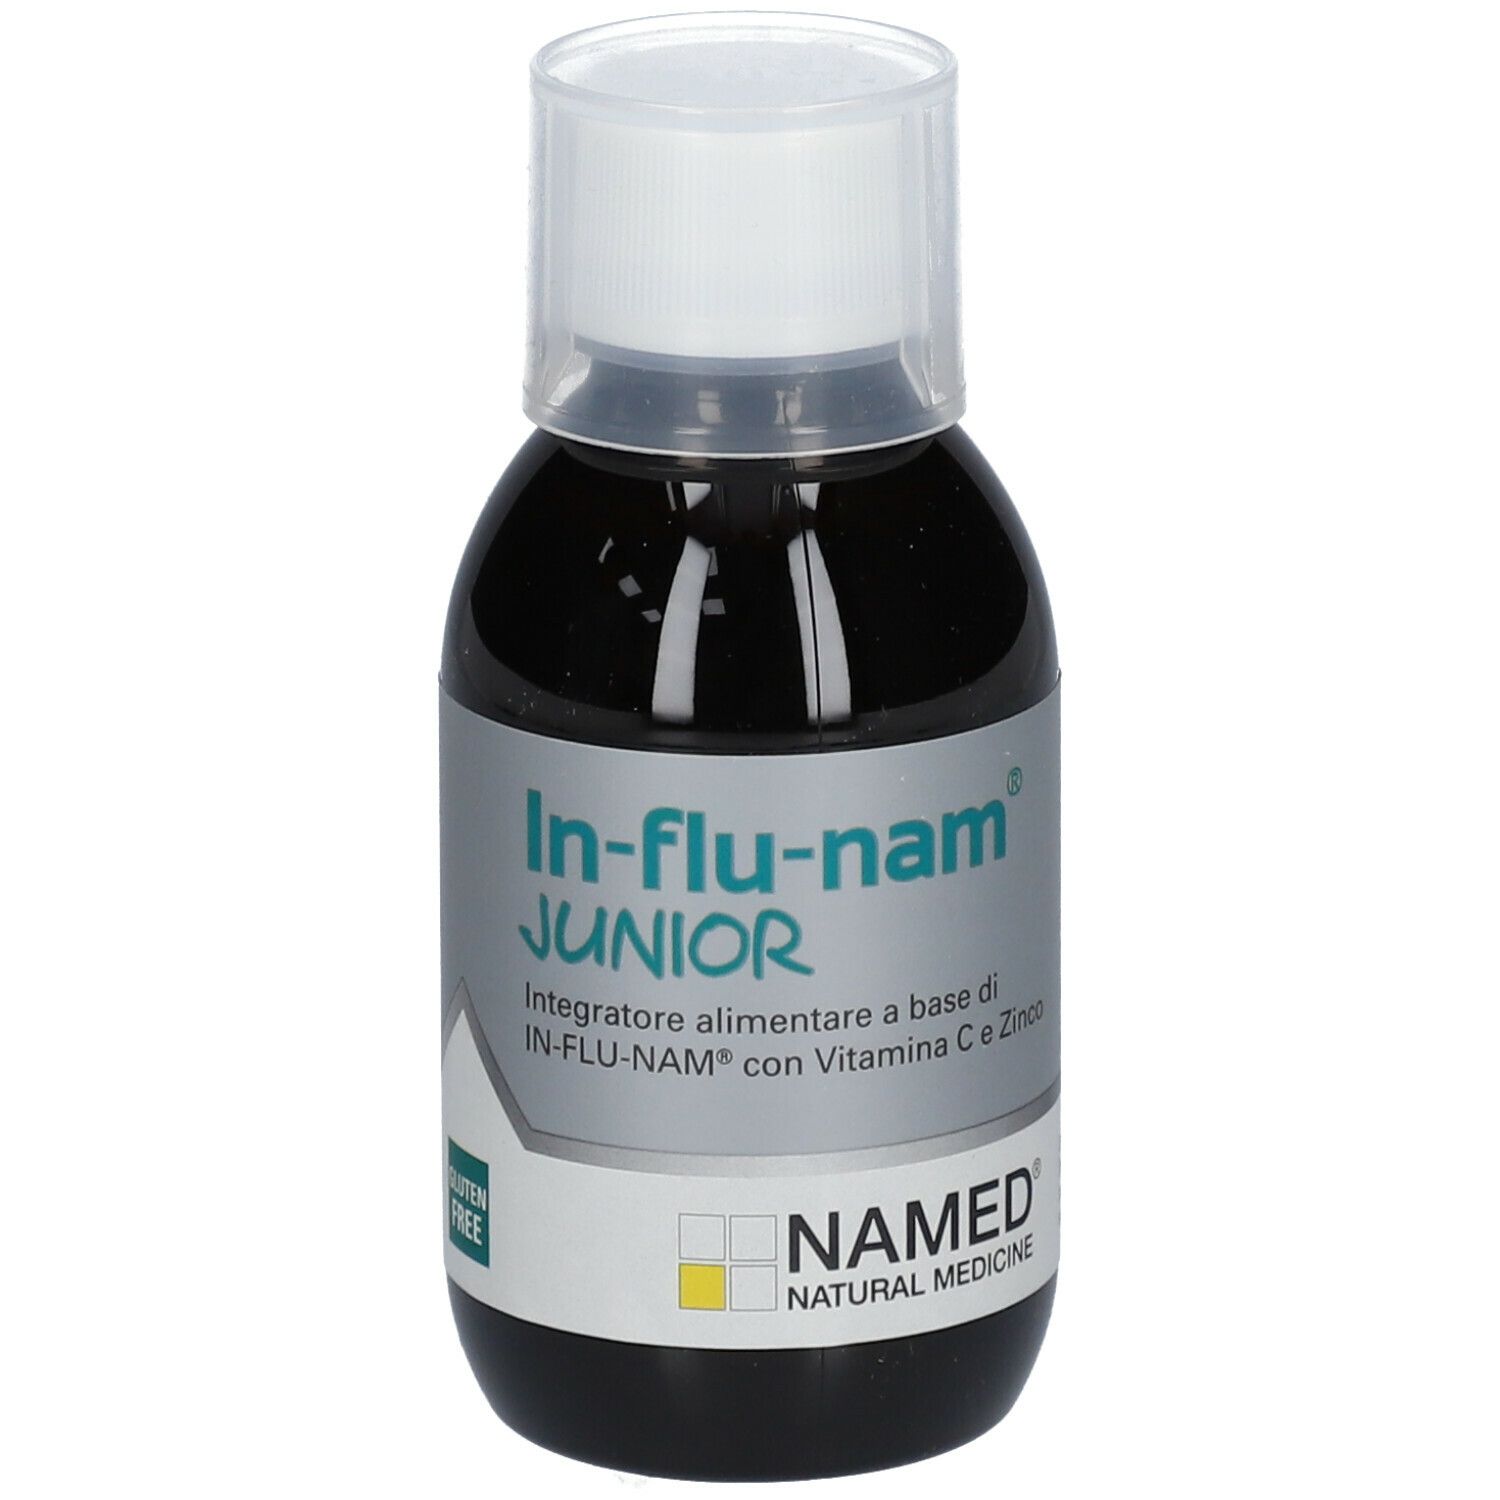 NAMED In-flu-nam® JUNIOR